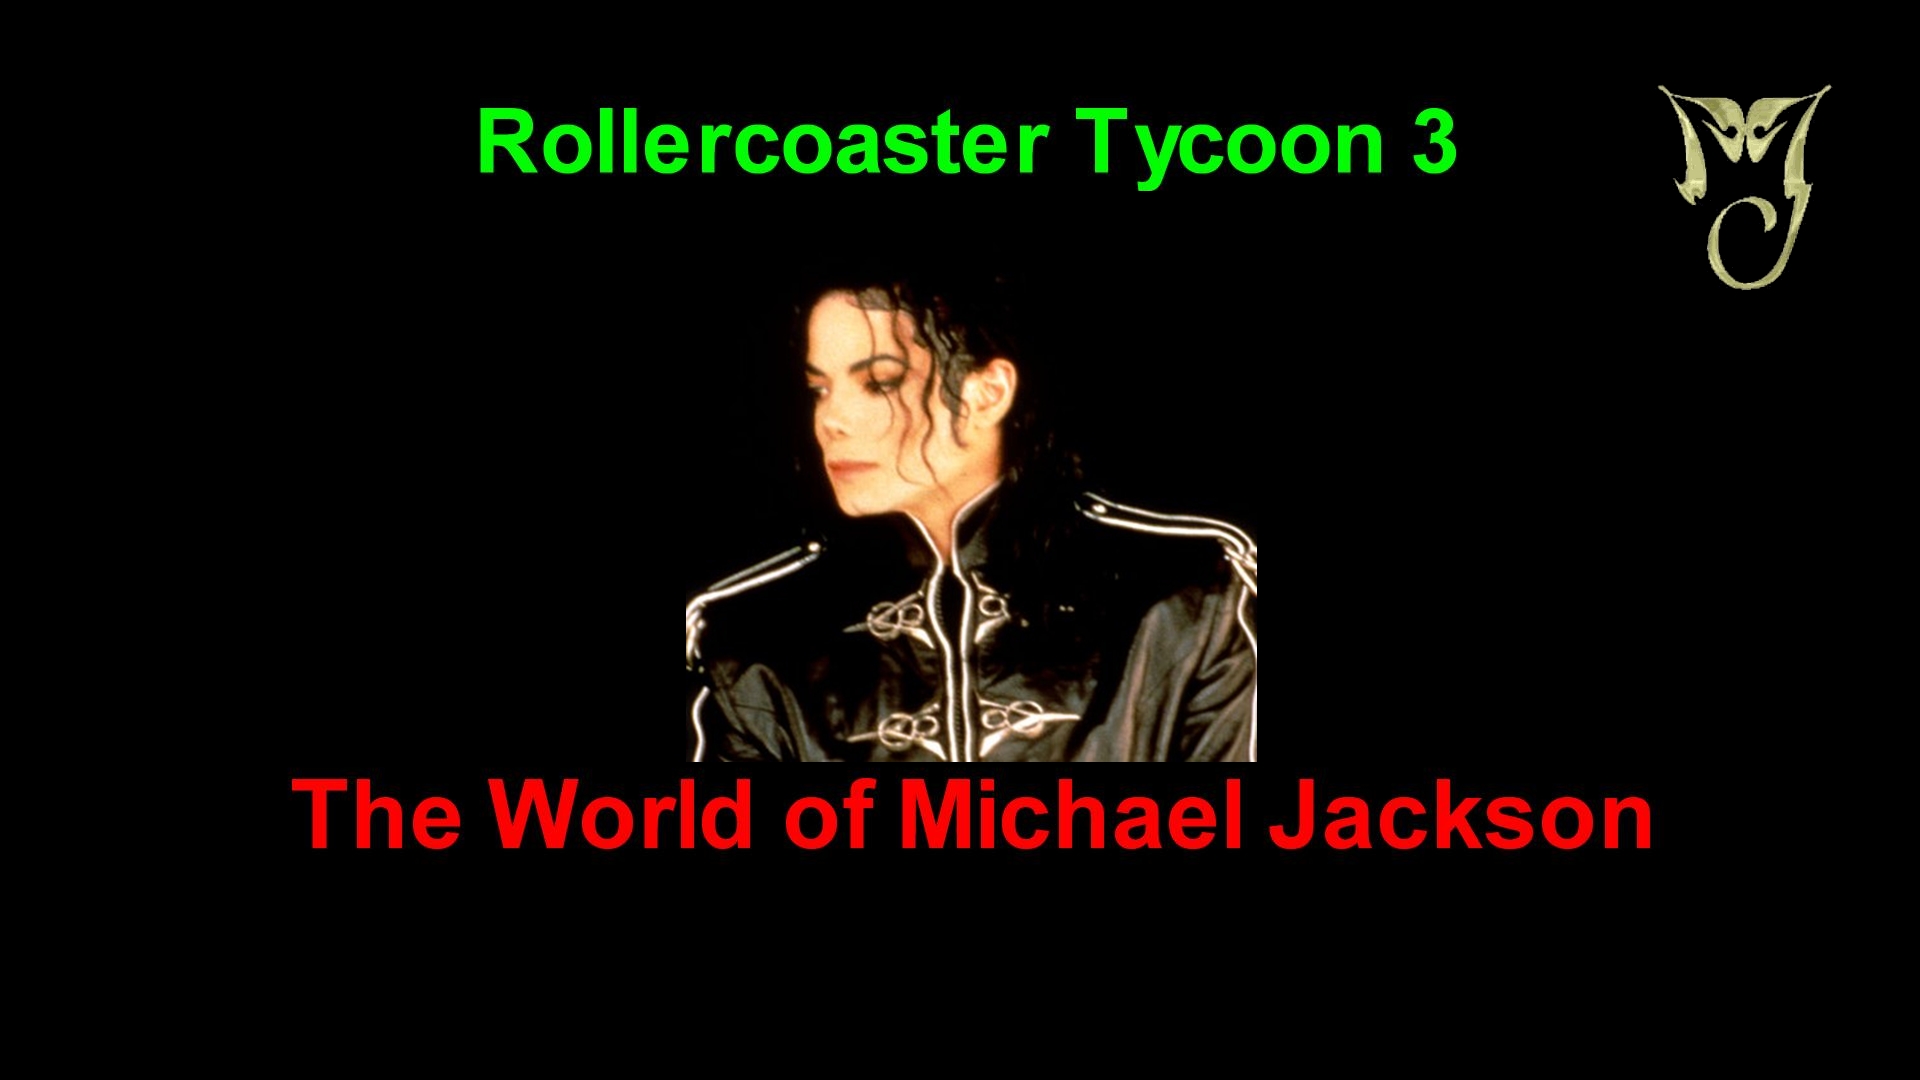 The World of Michael Jackson